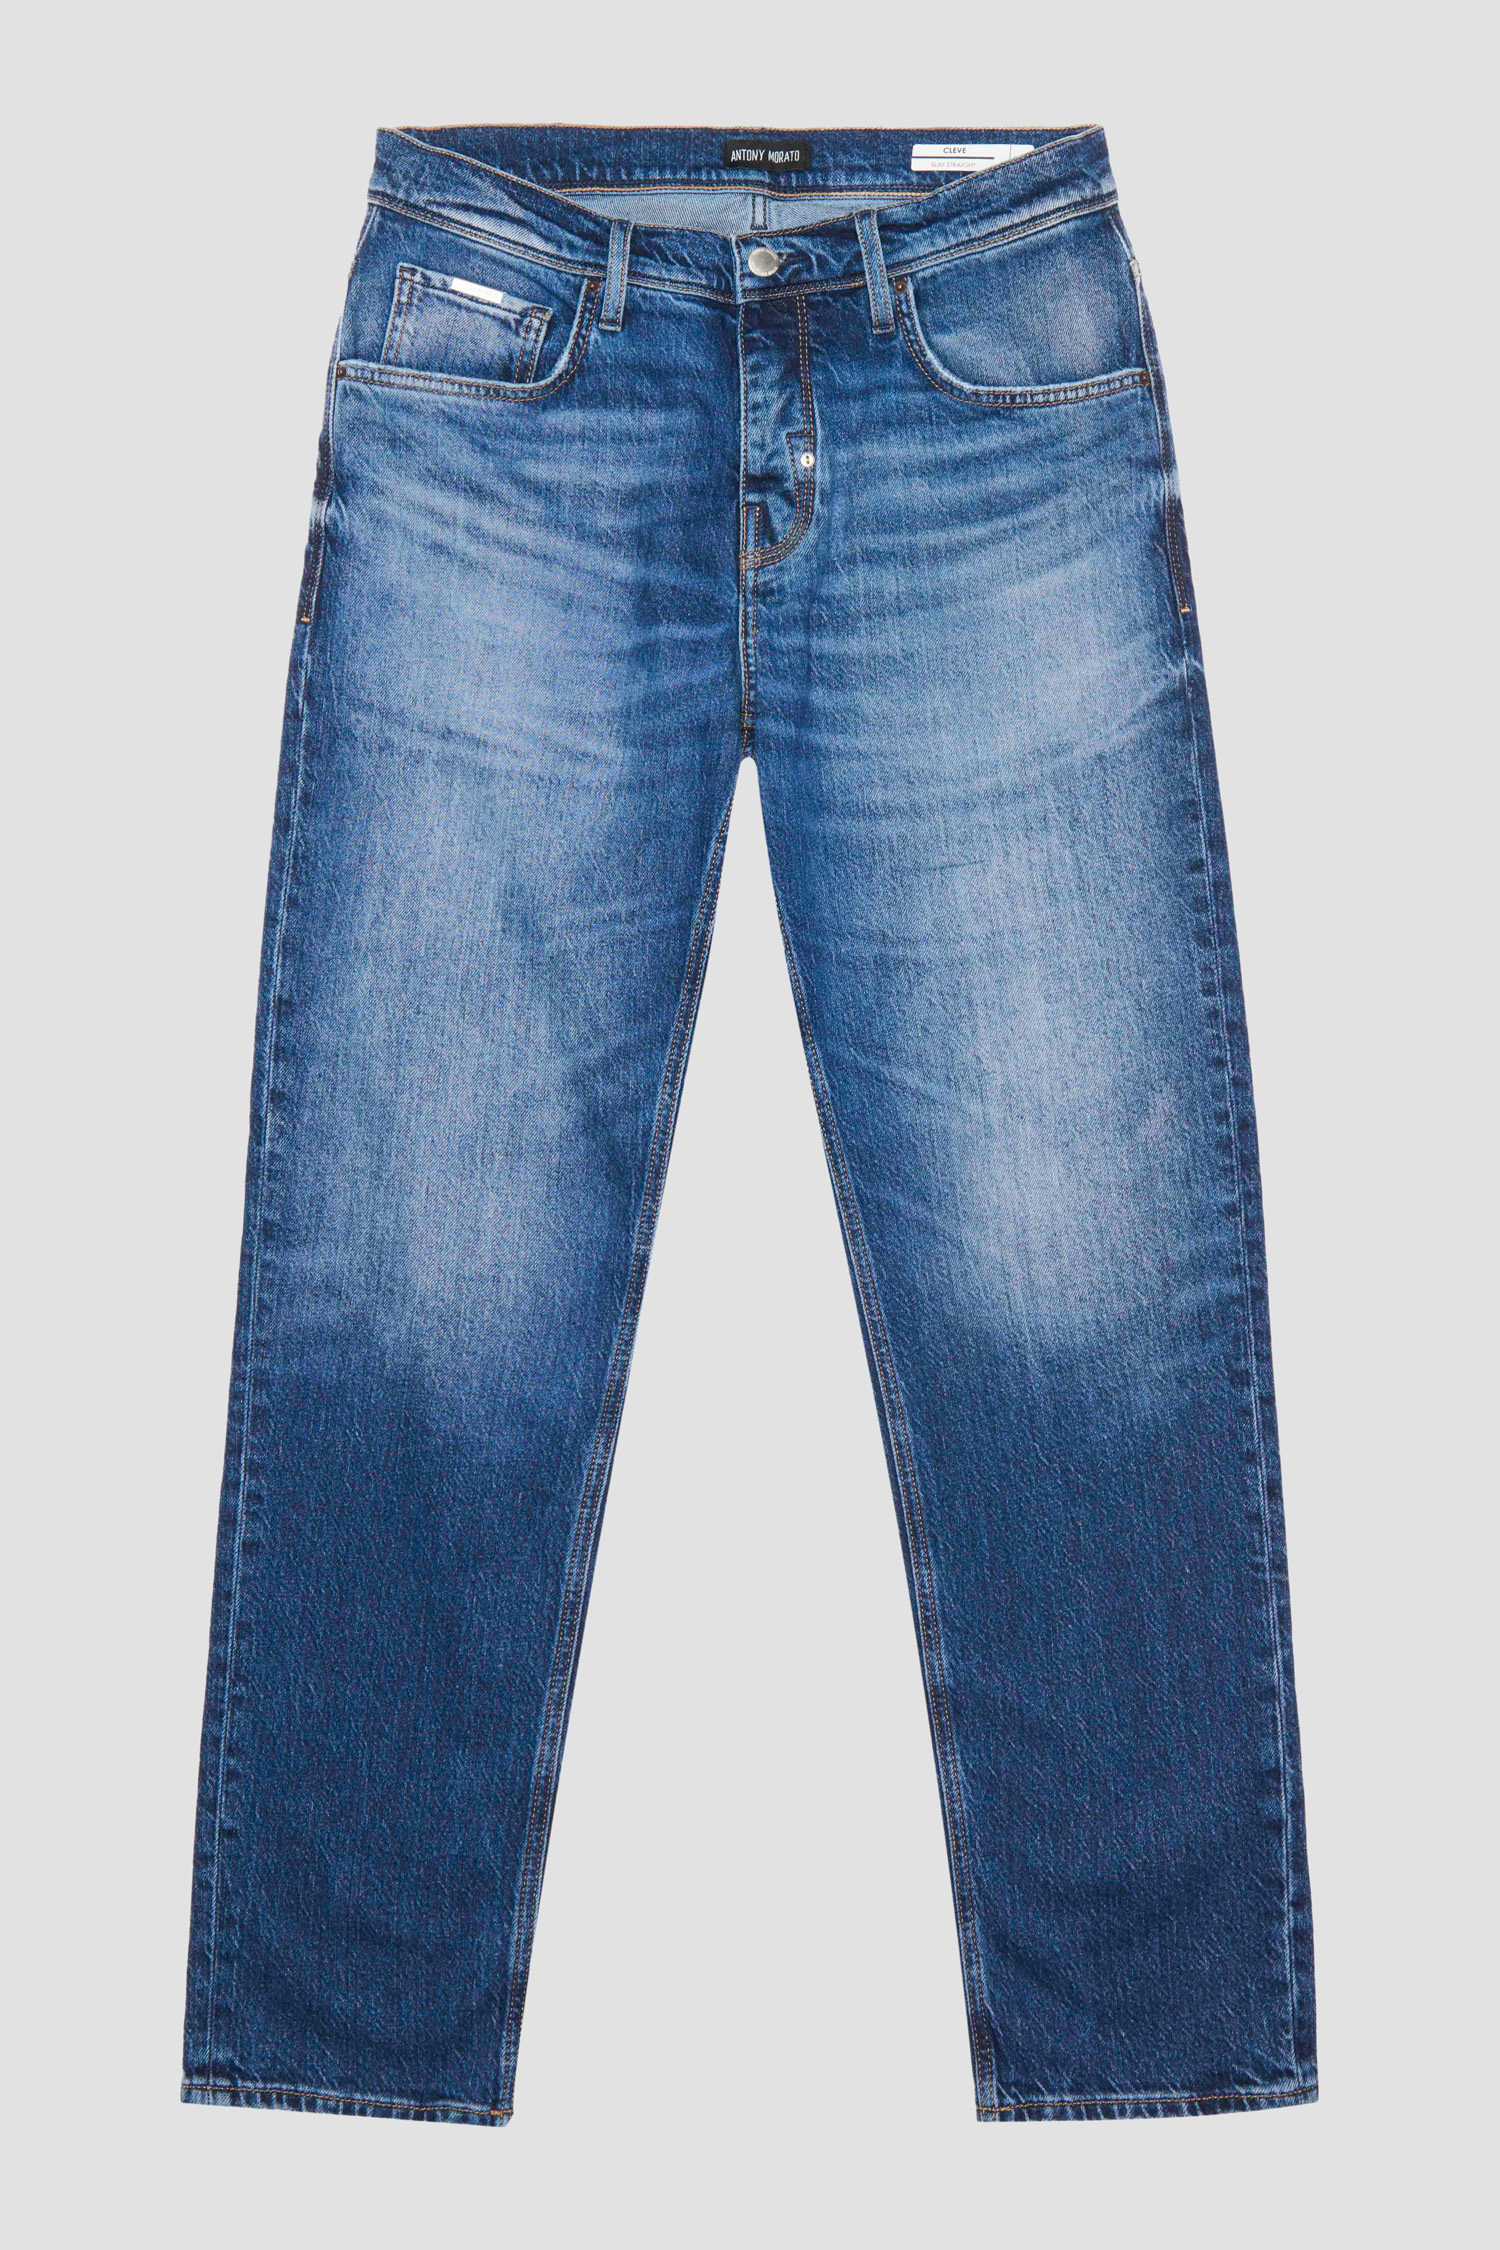 Мужские синие джинсы Antony Morato MMDT00267.FA750479;7010